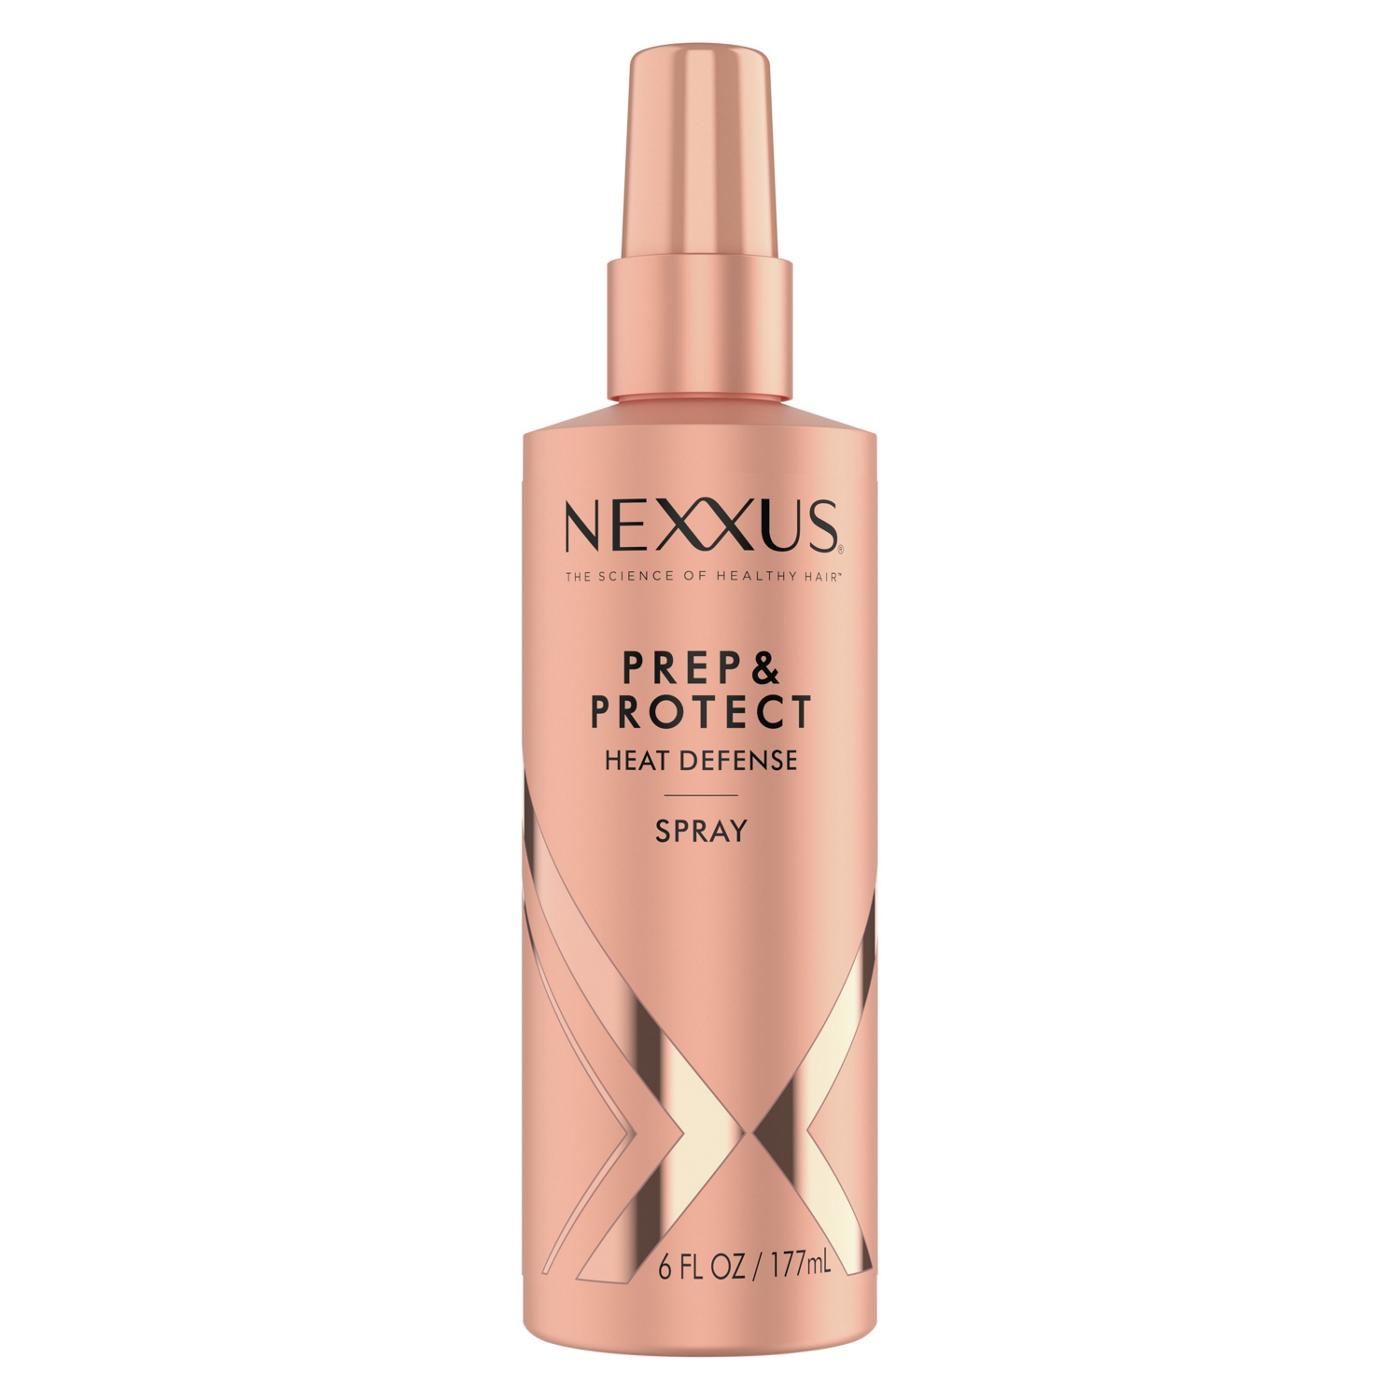 Nexxus Prep & Protect Heat Defense Spray; image 1 of 4